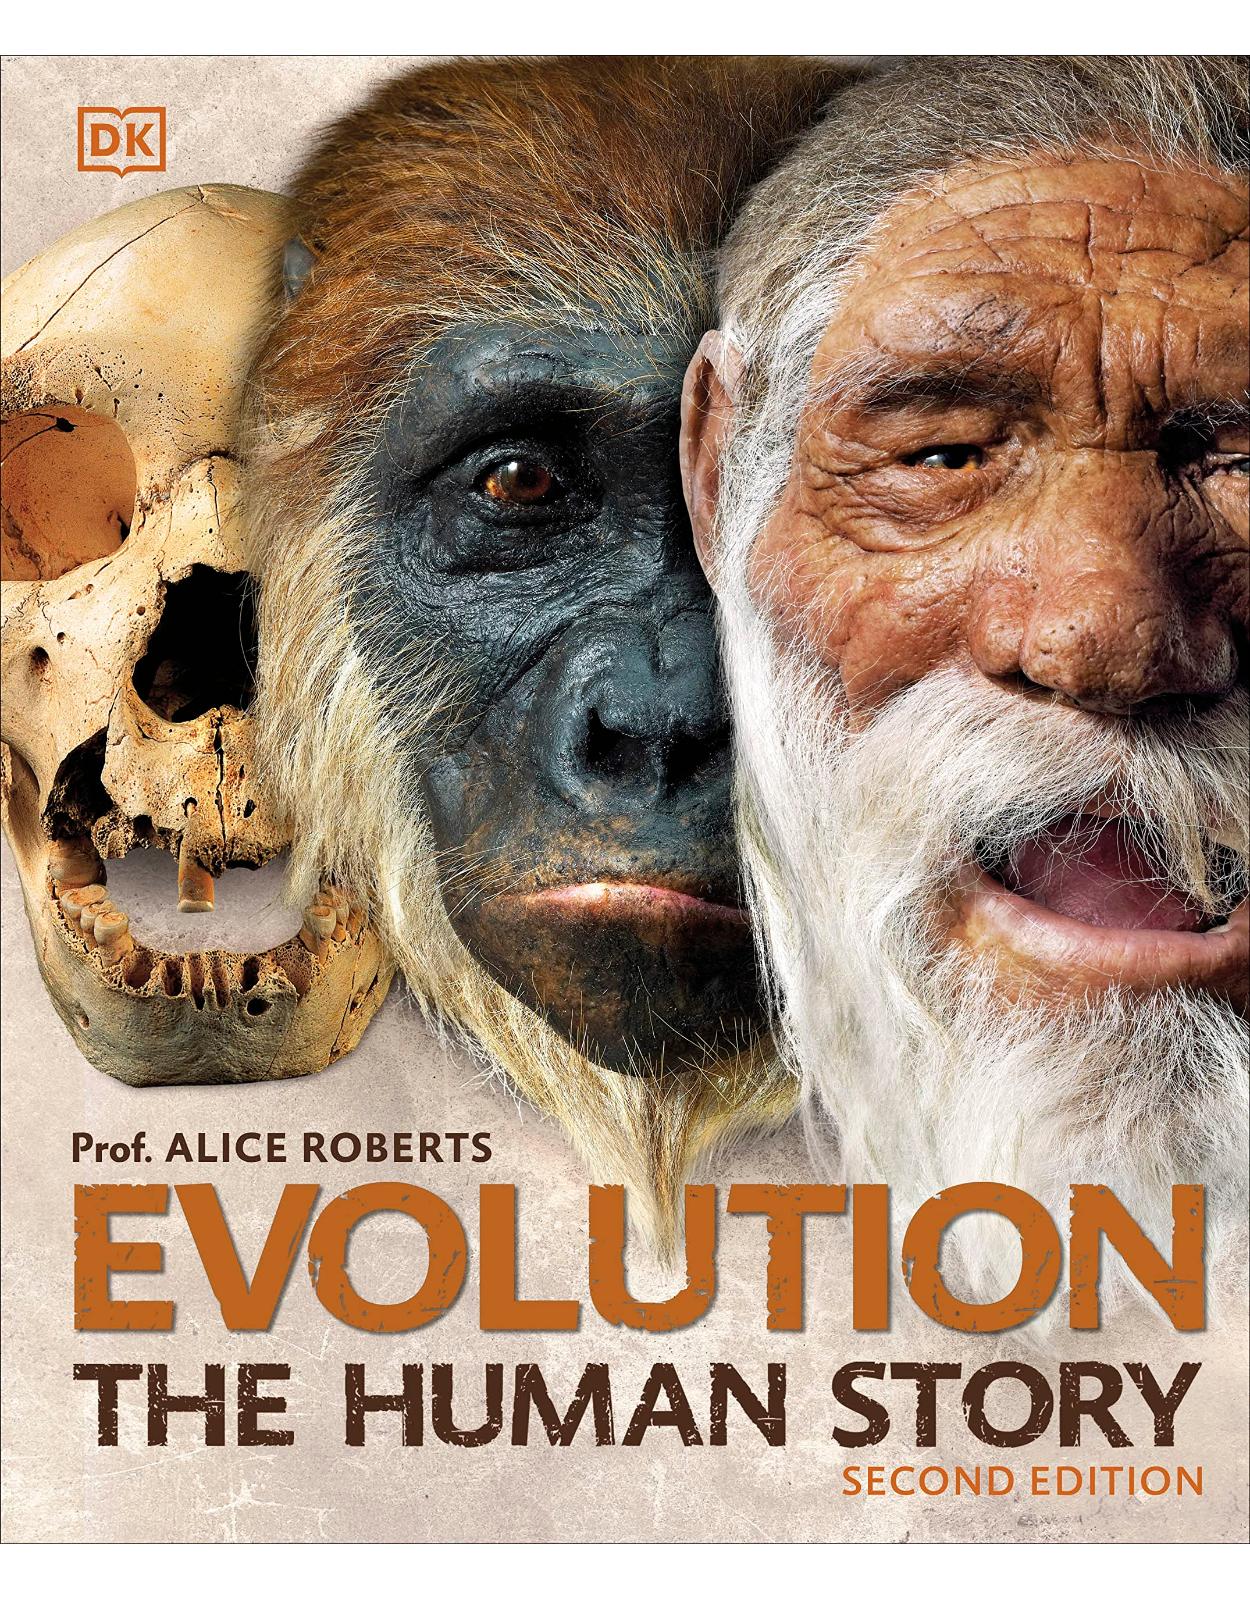 Evolution: The Human Story